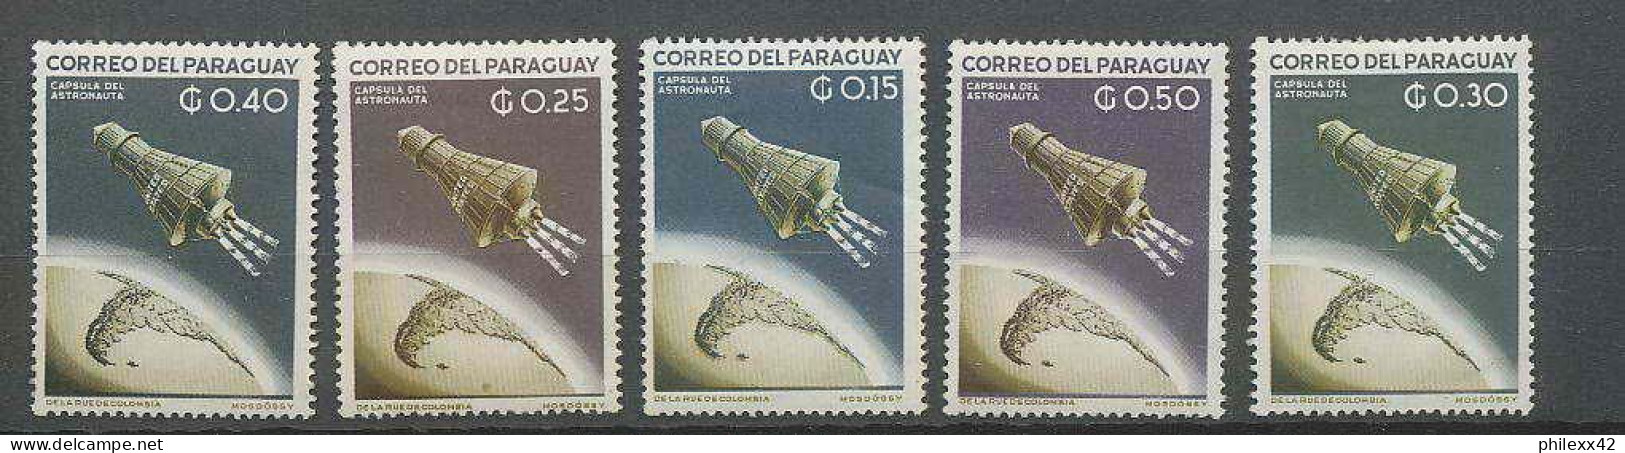 1218/ Espace (space) Neuf ** MNH Paraguay N° 1115/1119 Mercury - Zuid-Amerika